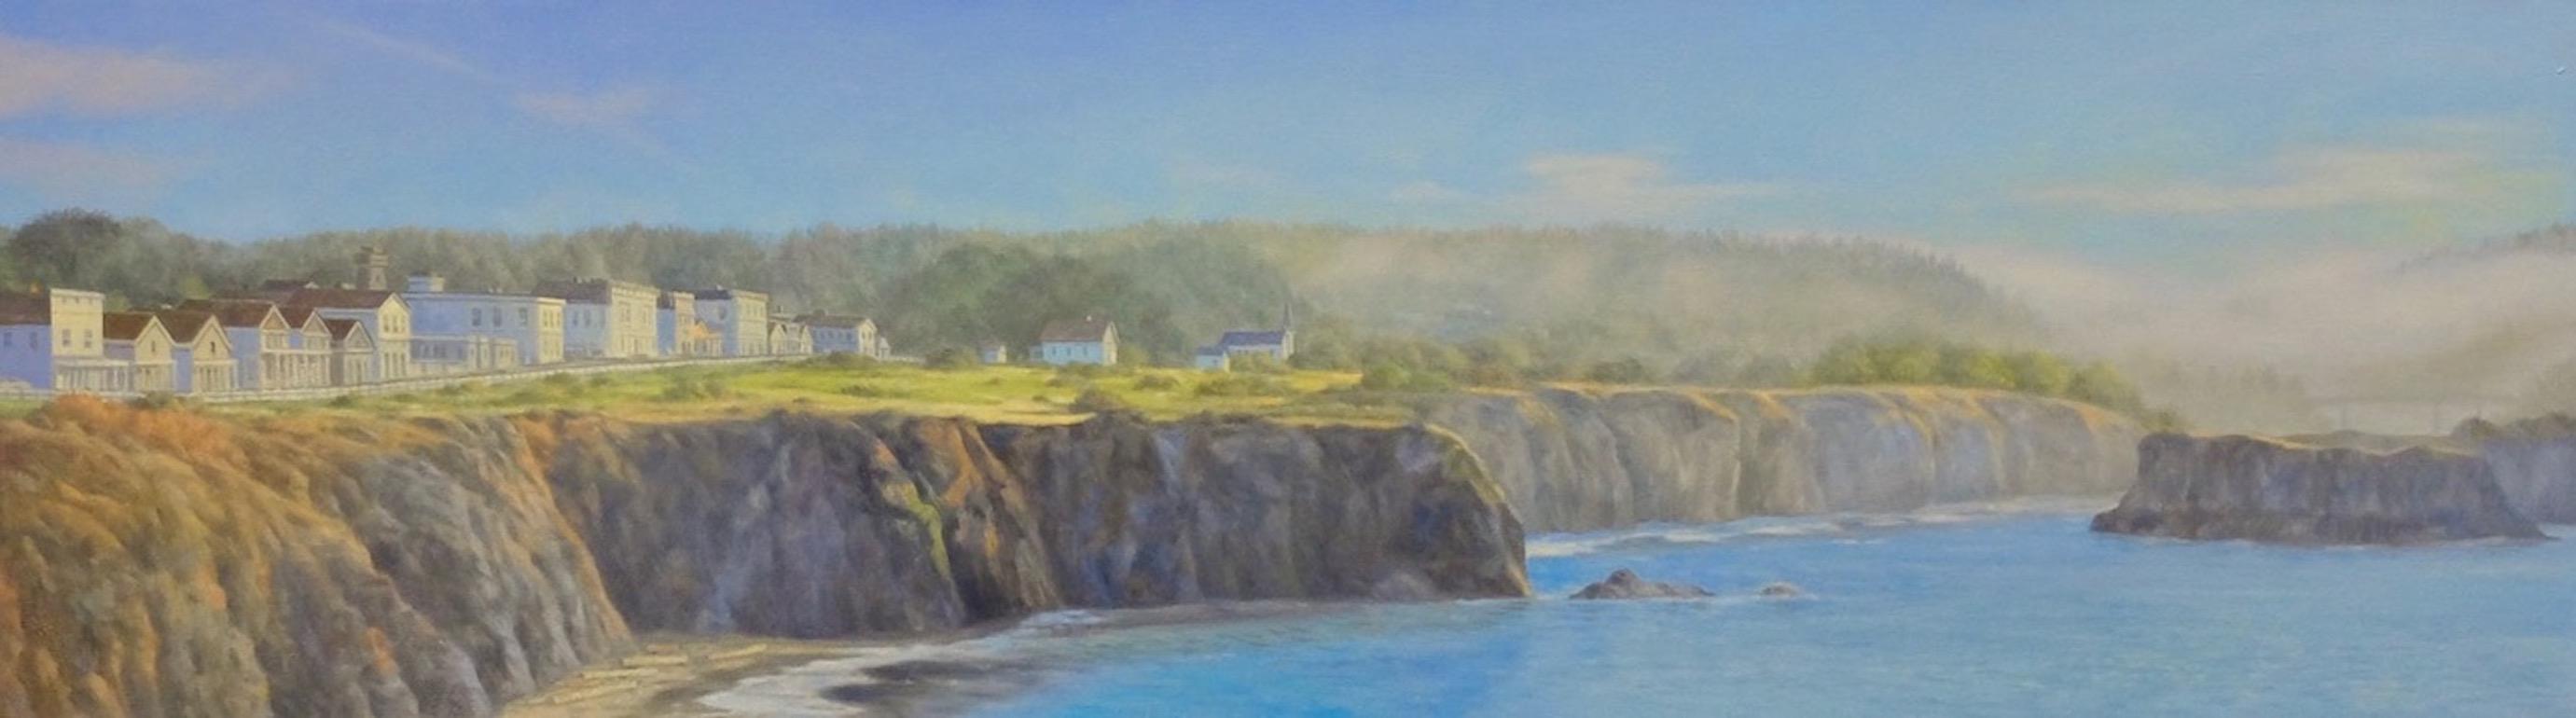 Willard Dixon Still-Life Painting - Mendocino / 17 x 60  inch breathtaking landscape / ocean scene - oil on canvas